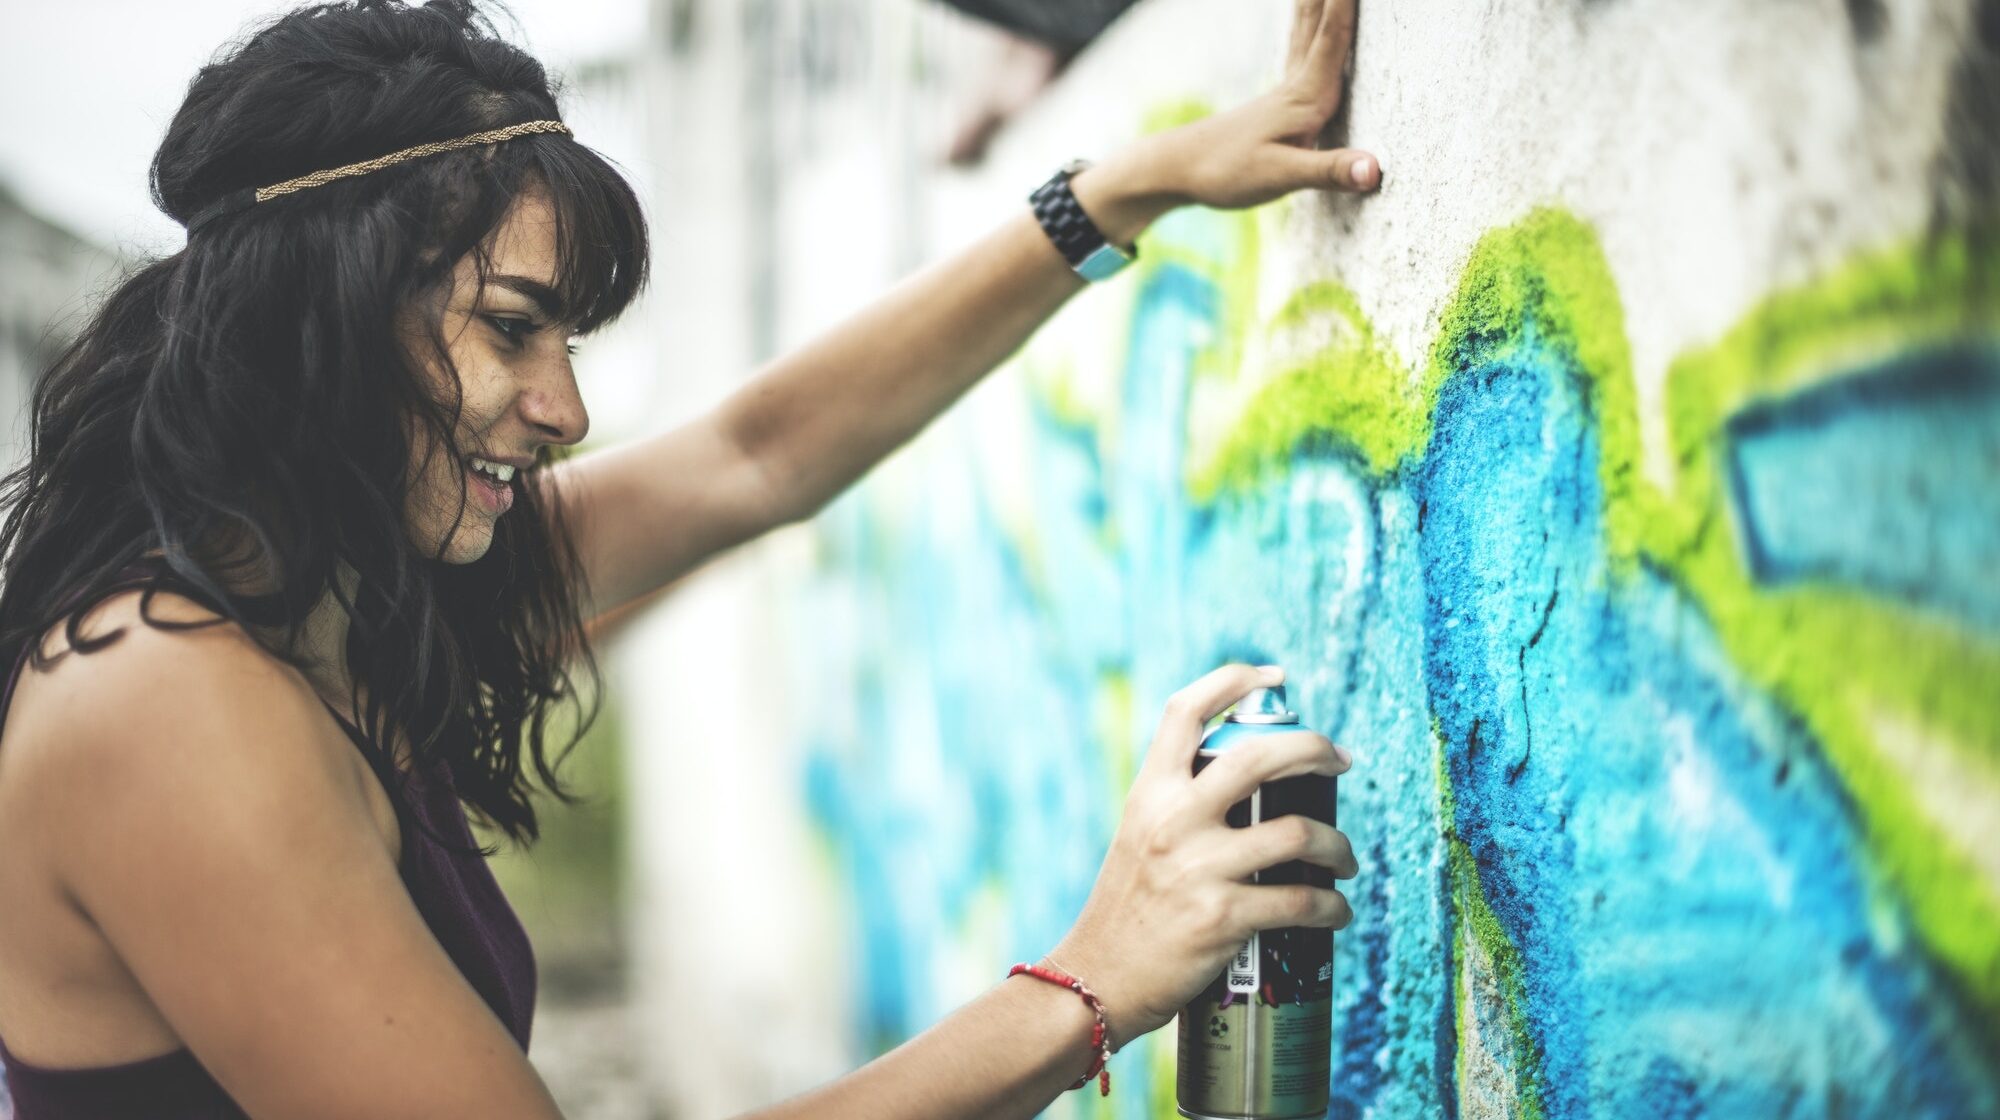 Mädchen, das Graffiti macht